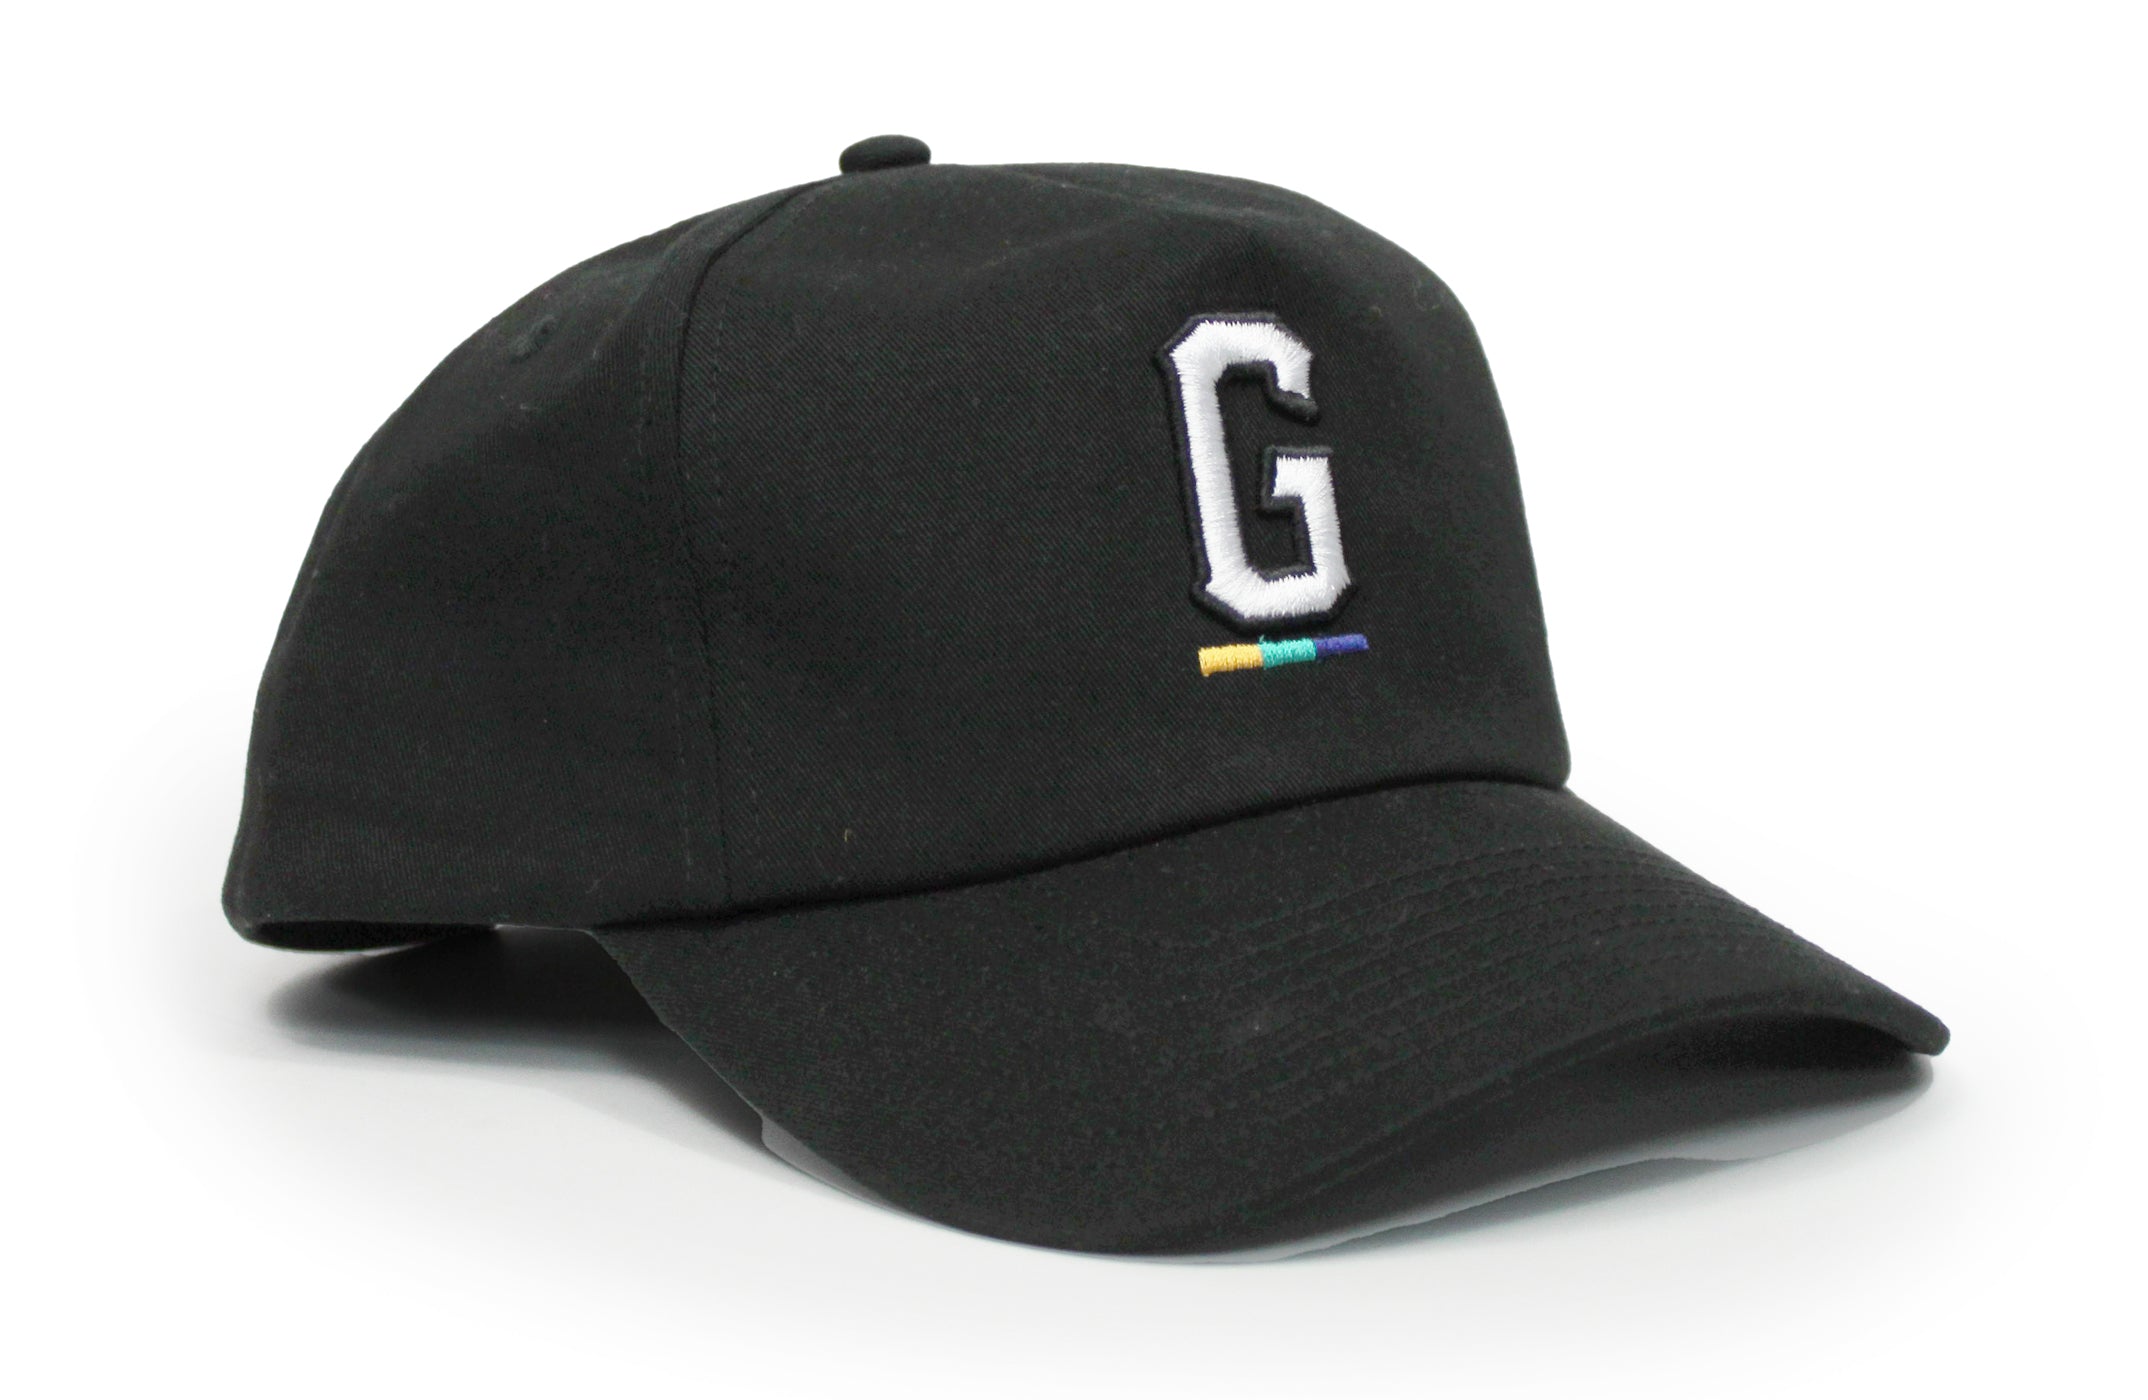 GPP "G" Soft Structure Cap - Black